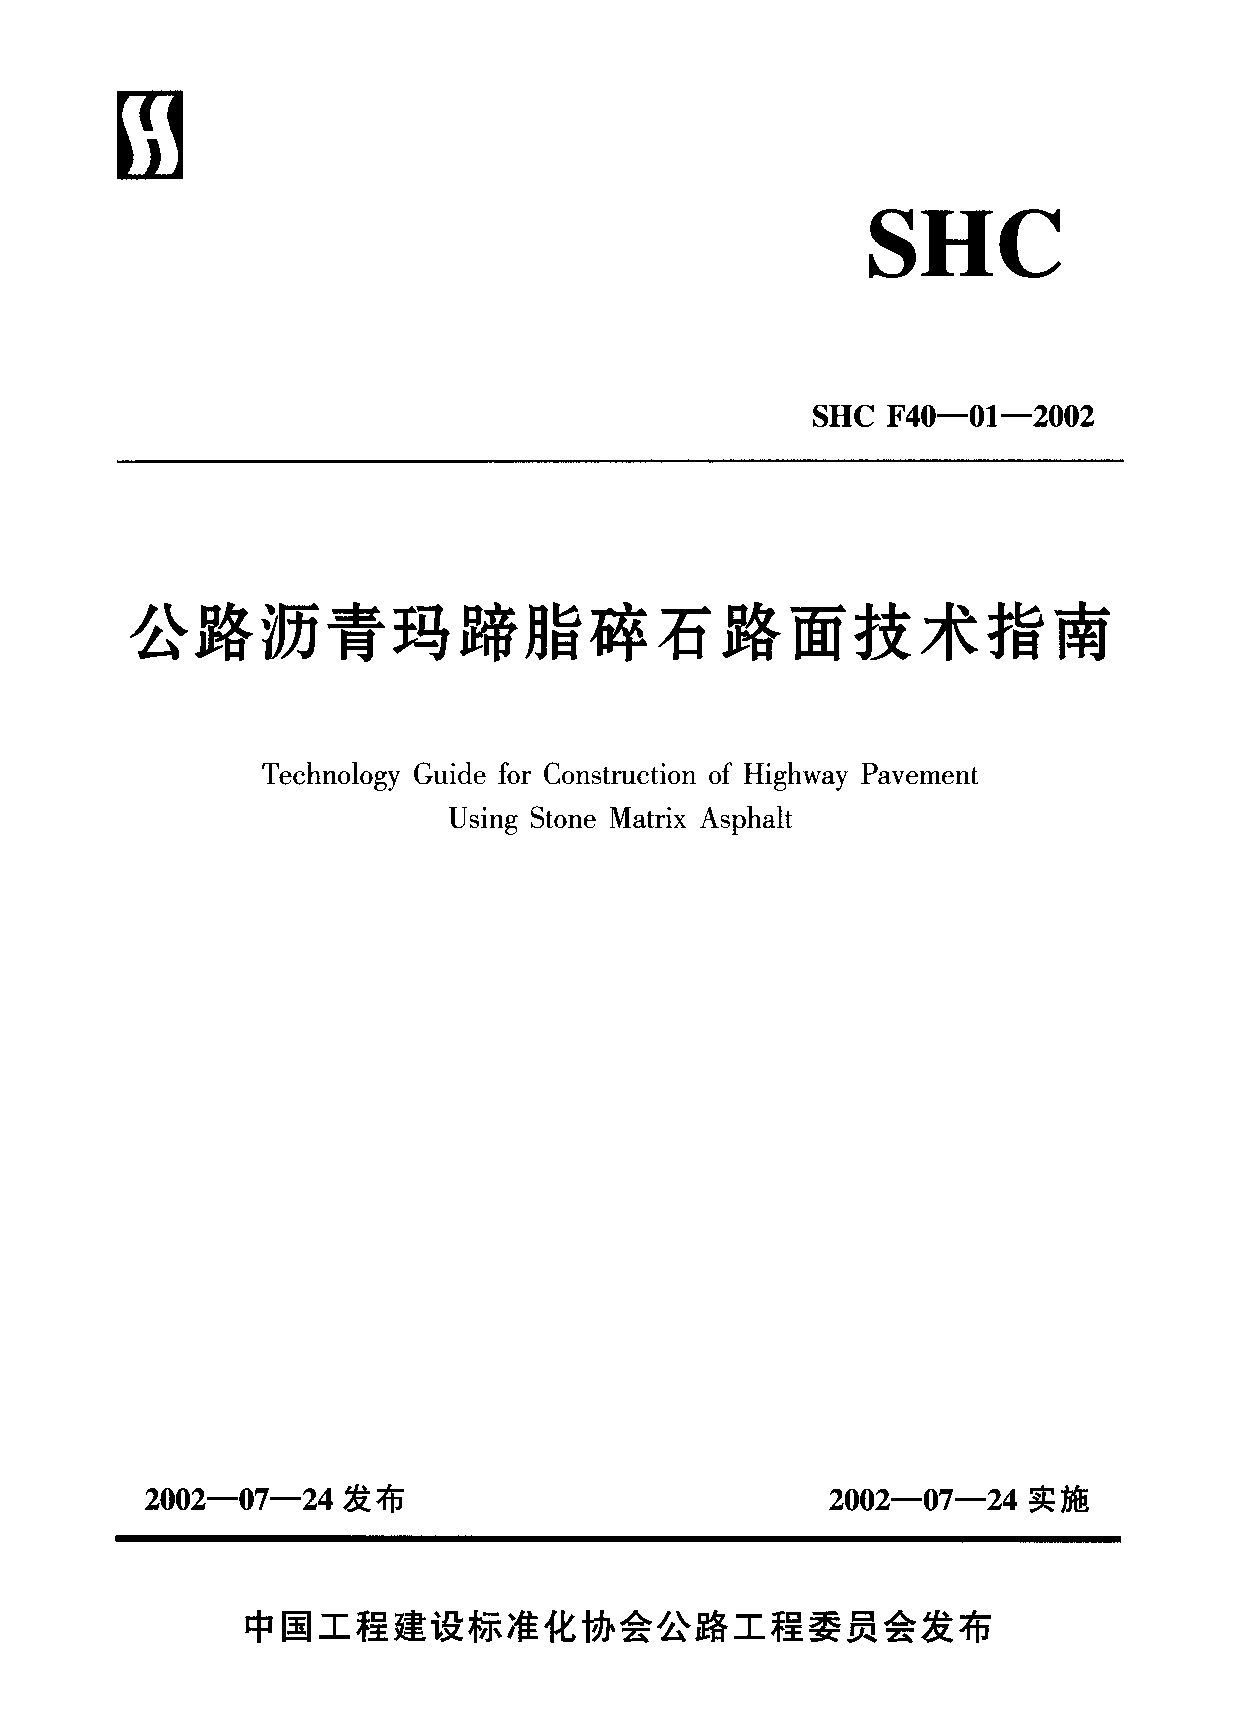 SHC F40-01-2002